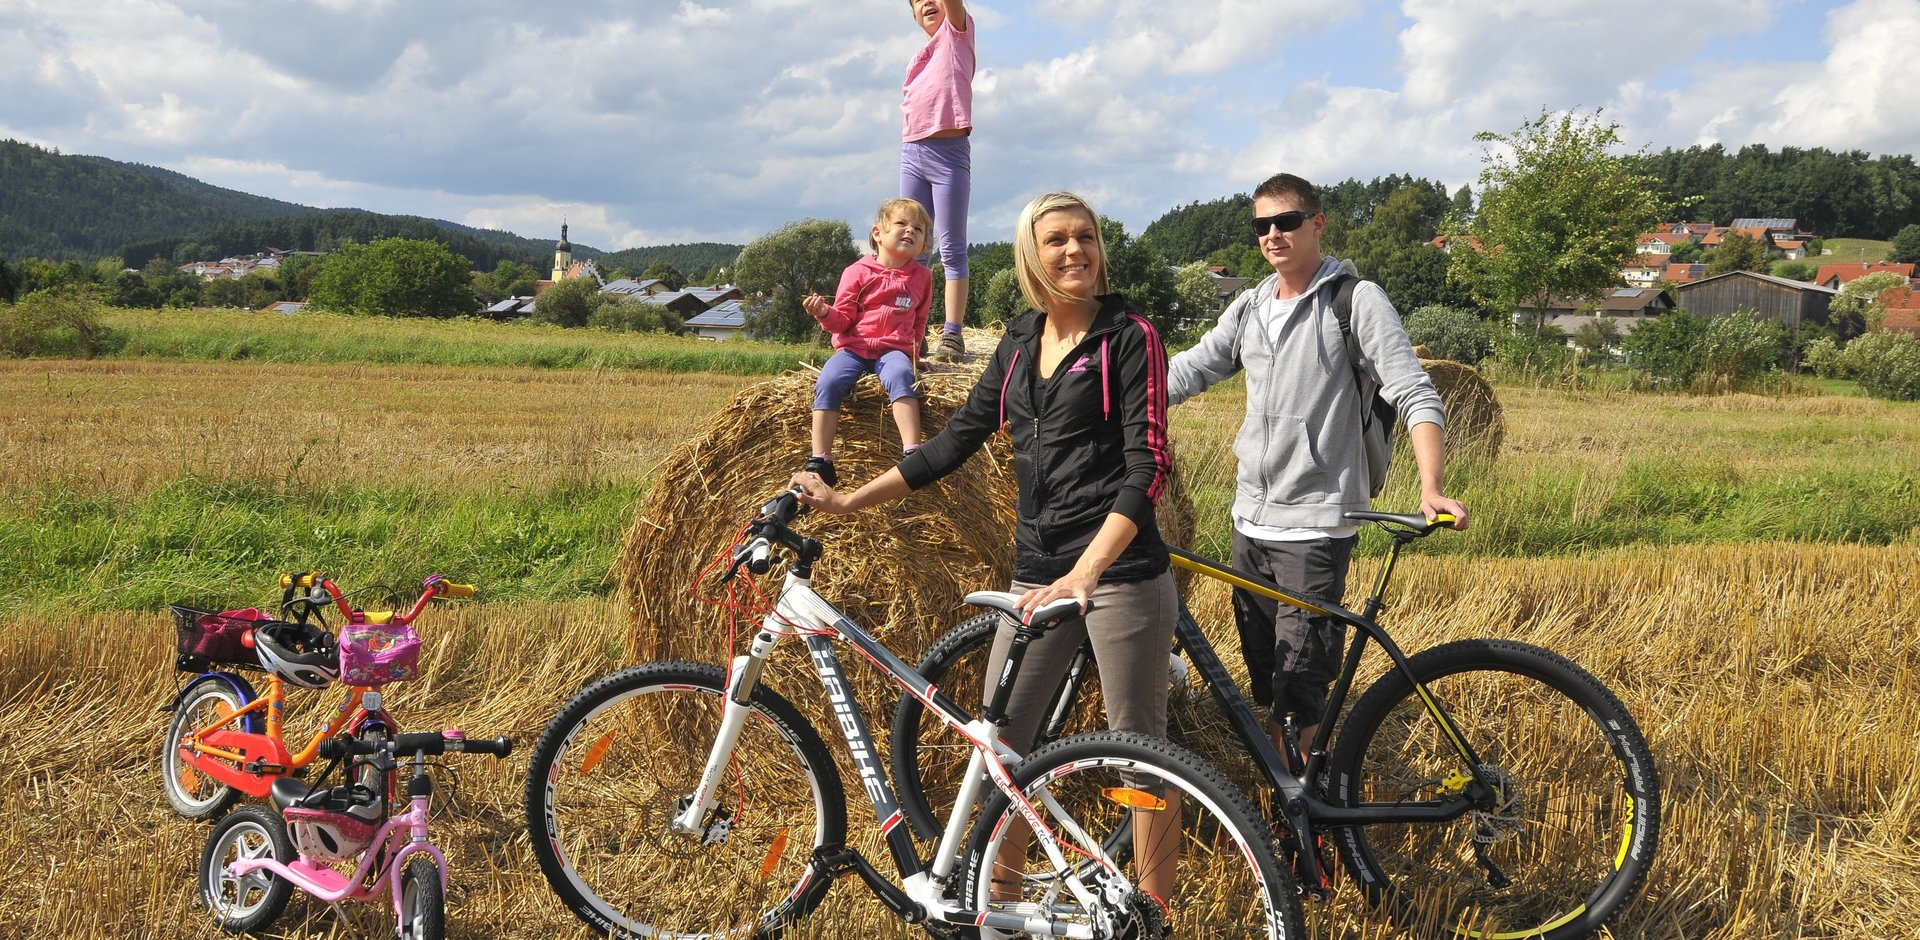 Familienausflug mit dem Rad bei Blaibach